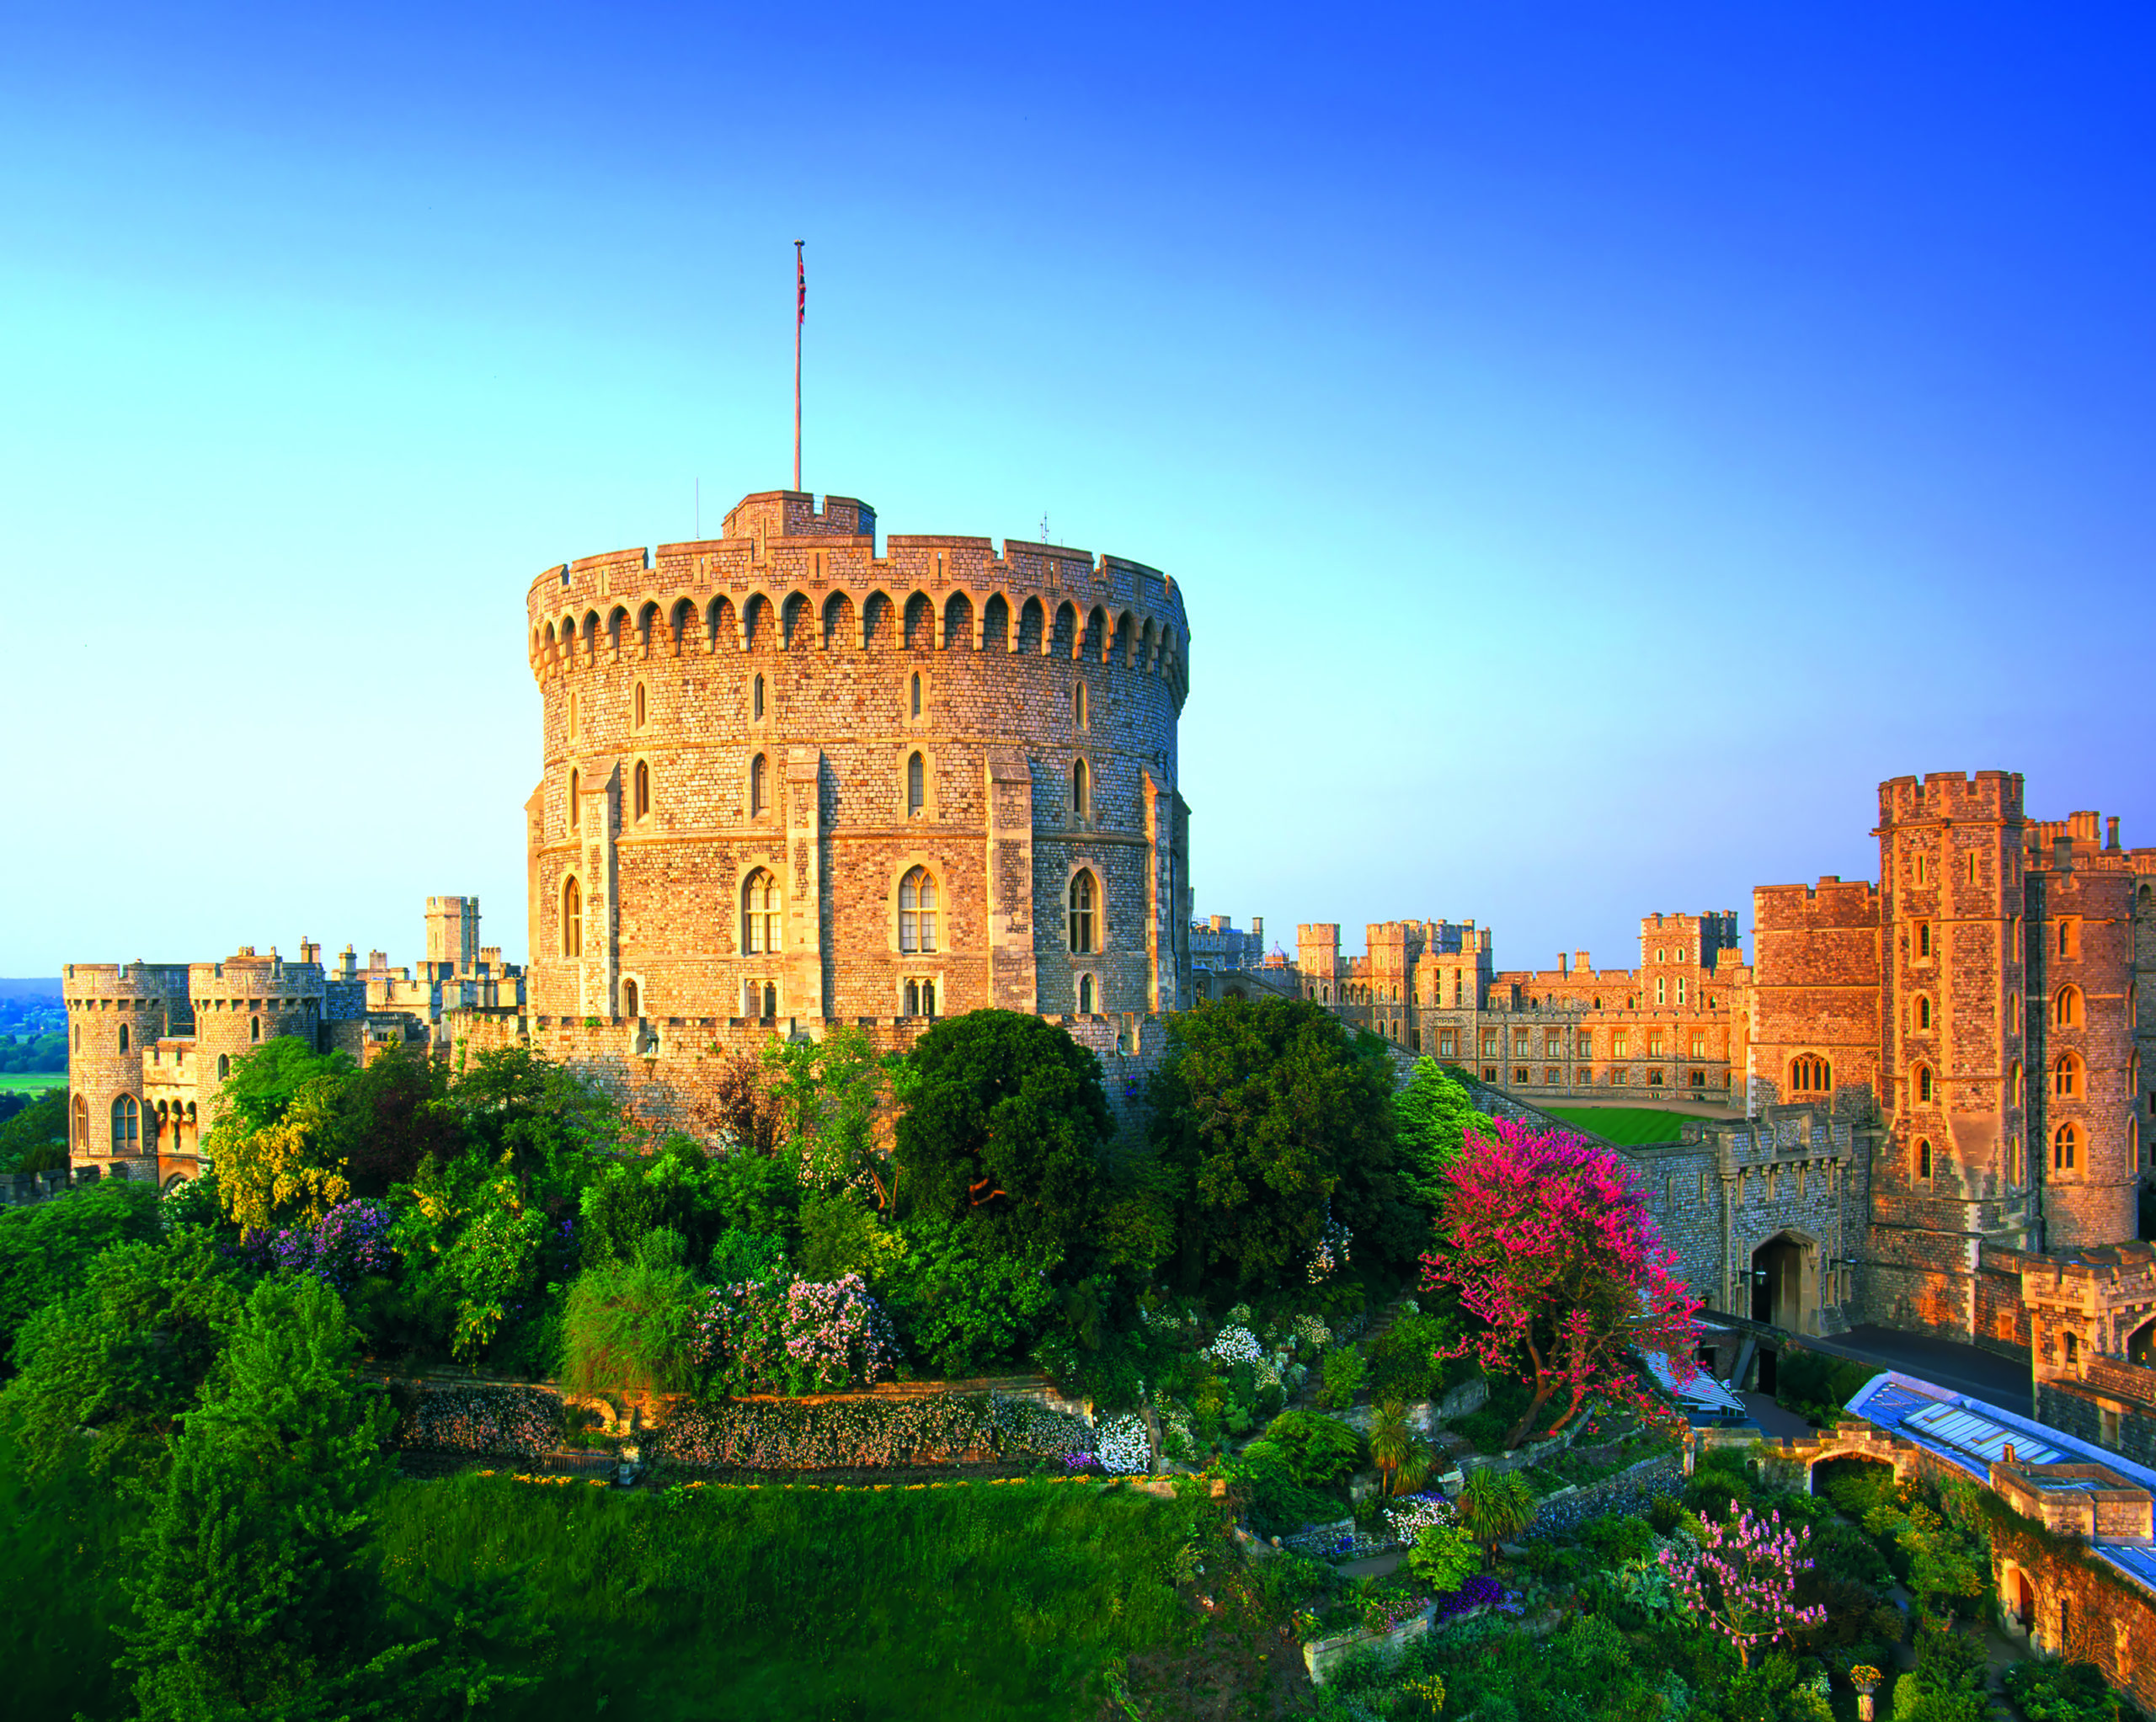 Windsor Castle © Royal Collection Trust